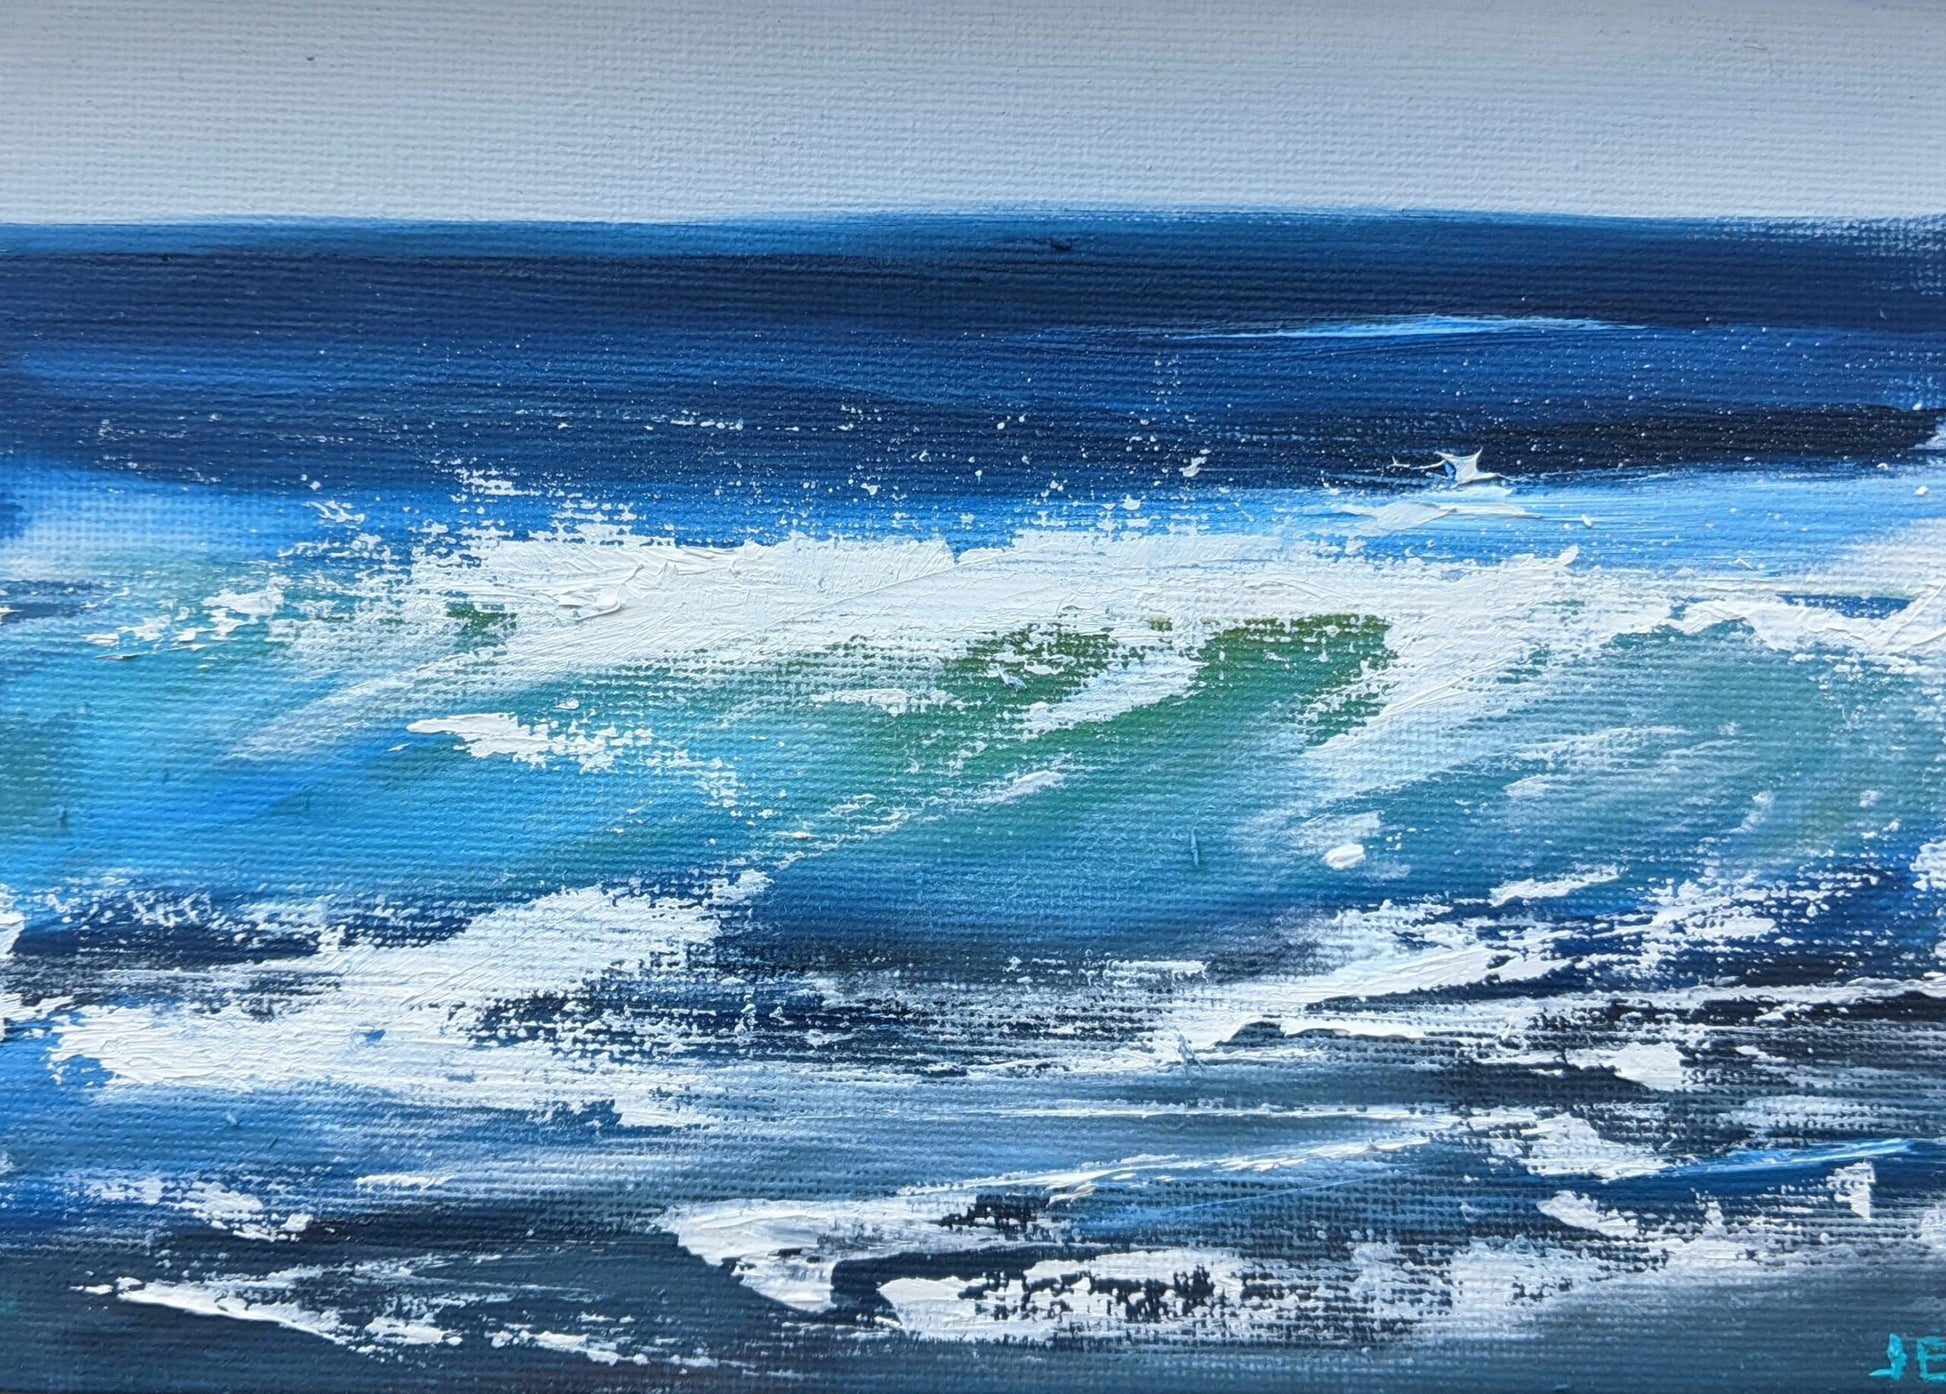 Miniature Wave Seascape #3 oil painting on canvas board, by Jo Earl